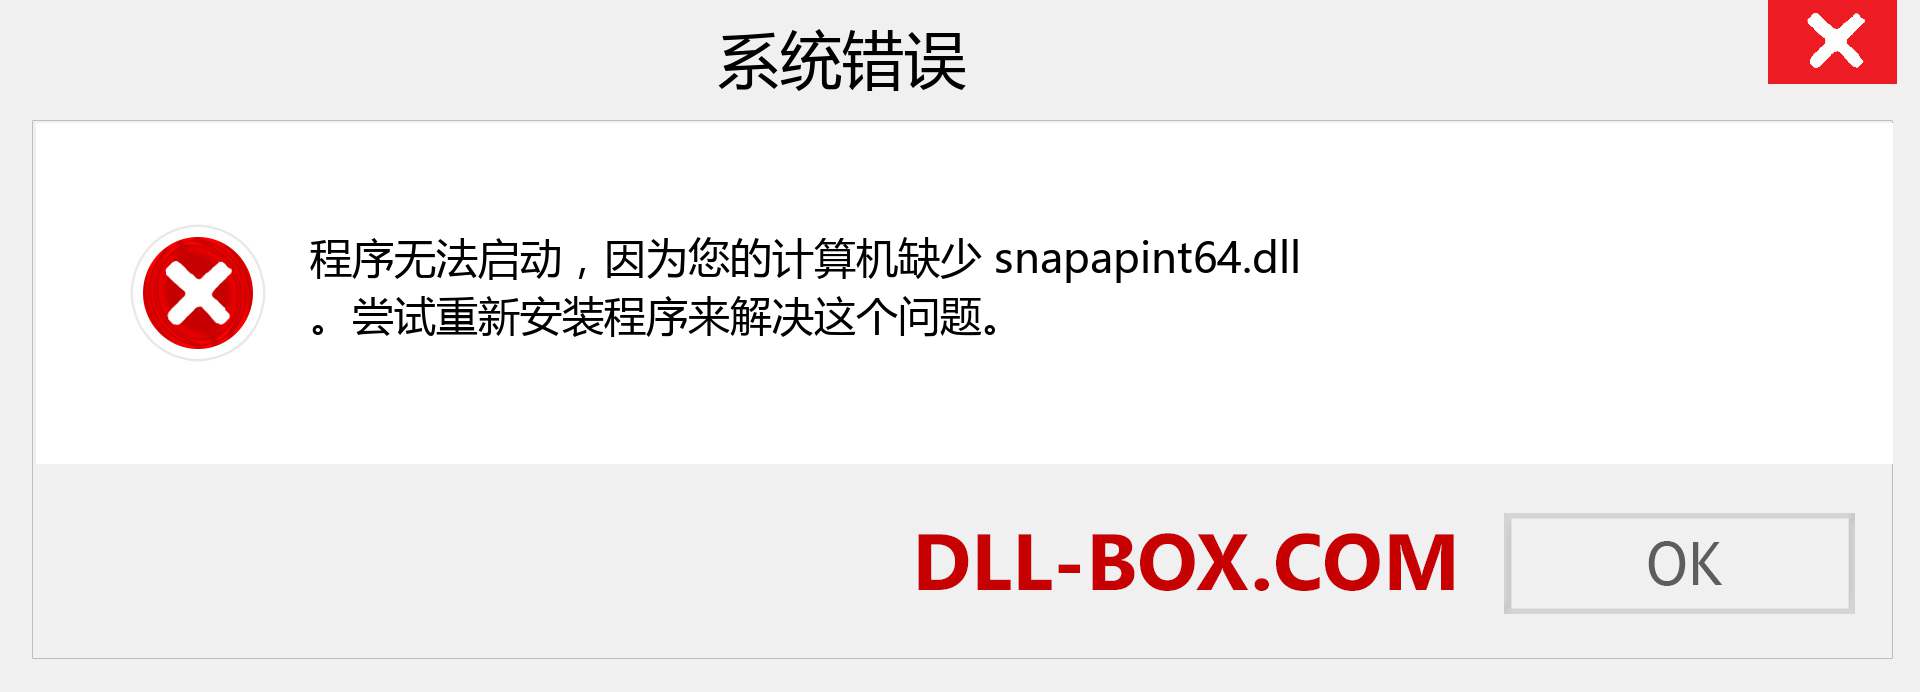 snapapint64.dll 文件丢失？。 适用于 Windows 7、8、10 的下载 - 修复 Windows、照片、图像上的 snapapint64 dll 丢失错误